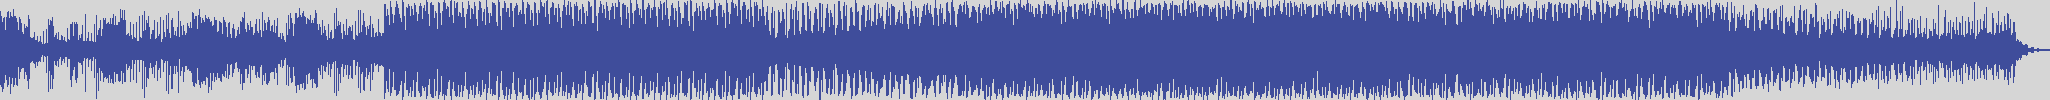 vitti_records [VIT020] Fm Kollective - Seychelles [Original Mix] audio wave form